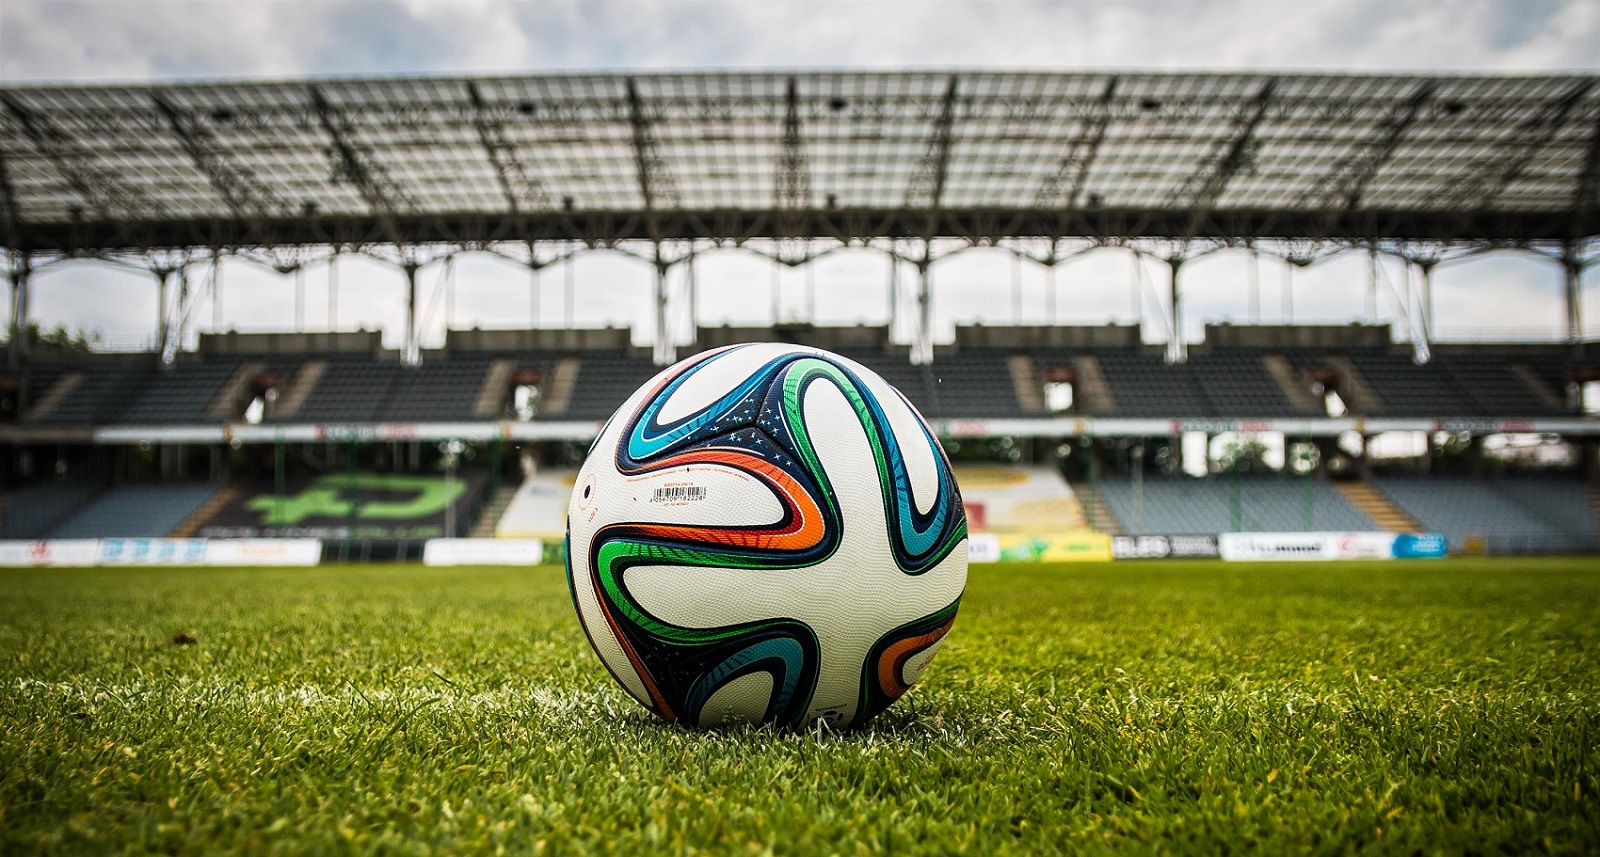 Kedudukan Aturan FIFA Sebagai Sumber Hukum dalam Sepak Bola Indonesia